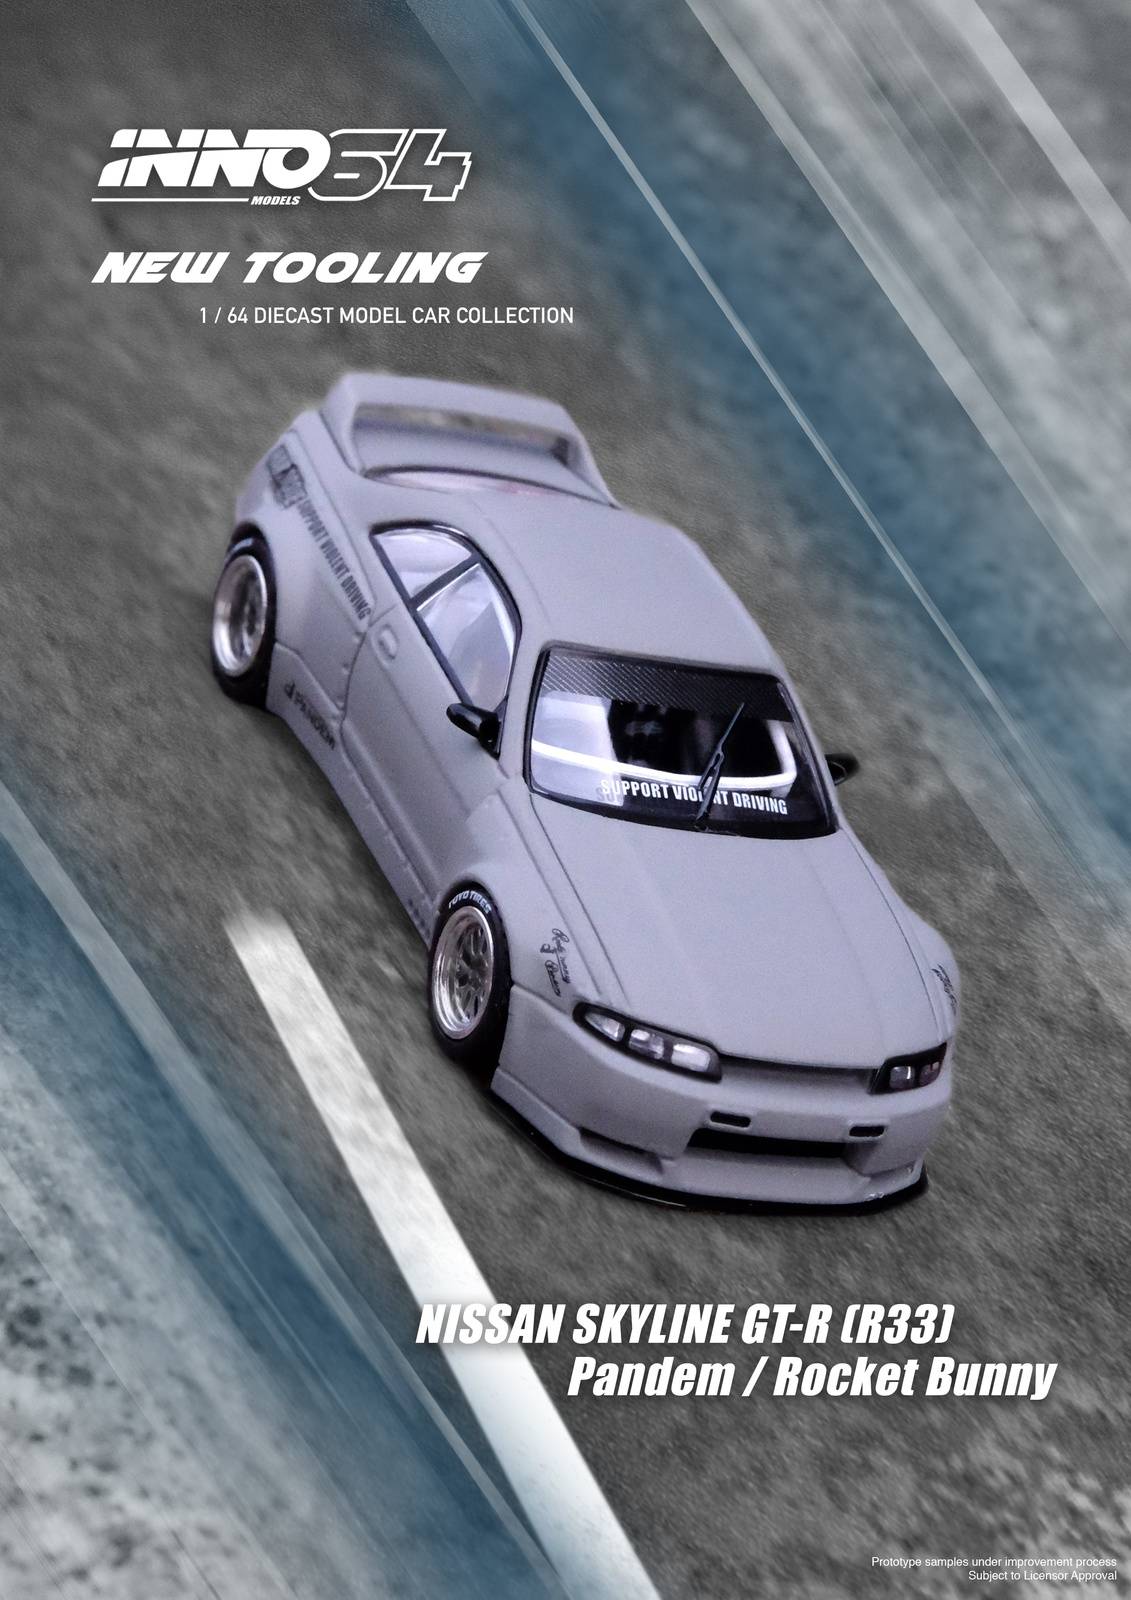 INNO64 1:64 Nissan Skyline GT-R R33 "Pandem/Rocket Bunny" Cement Grey Matte